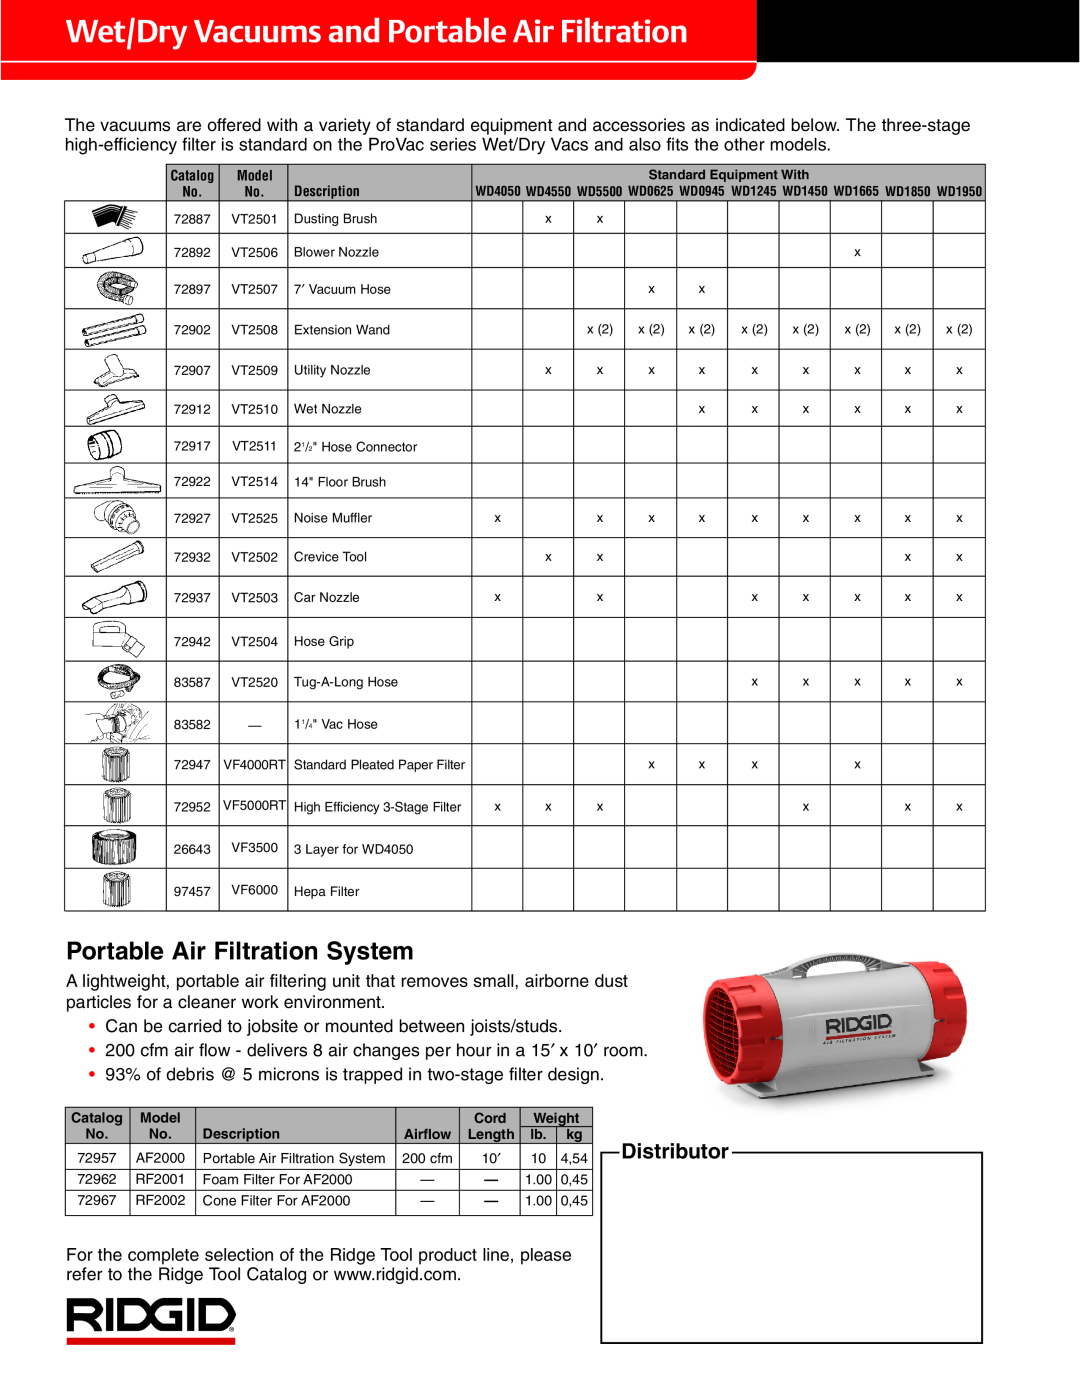 RIDGID AM2550 warranty Wet/Dry Vacuums and Portable Air Filtration, Portable Air Filtration System, Distributor 